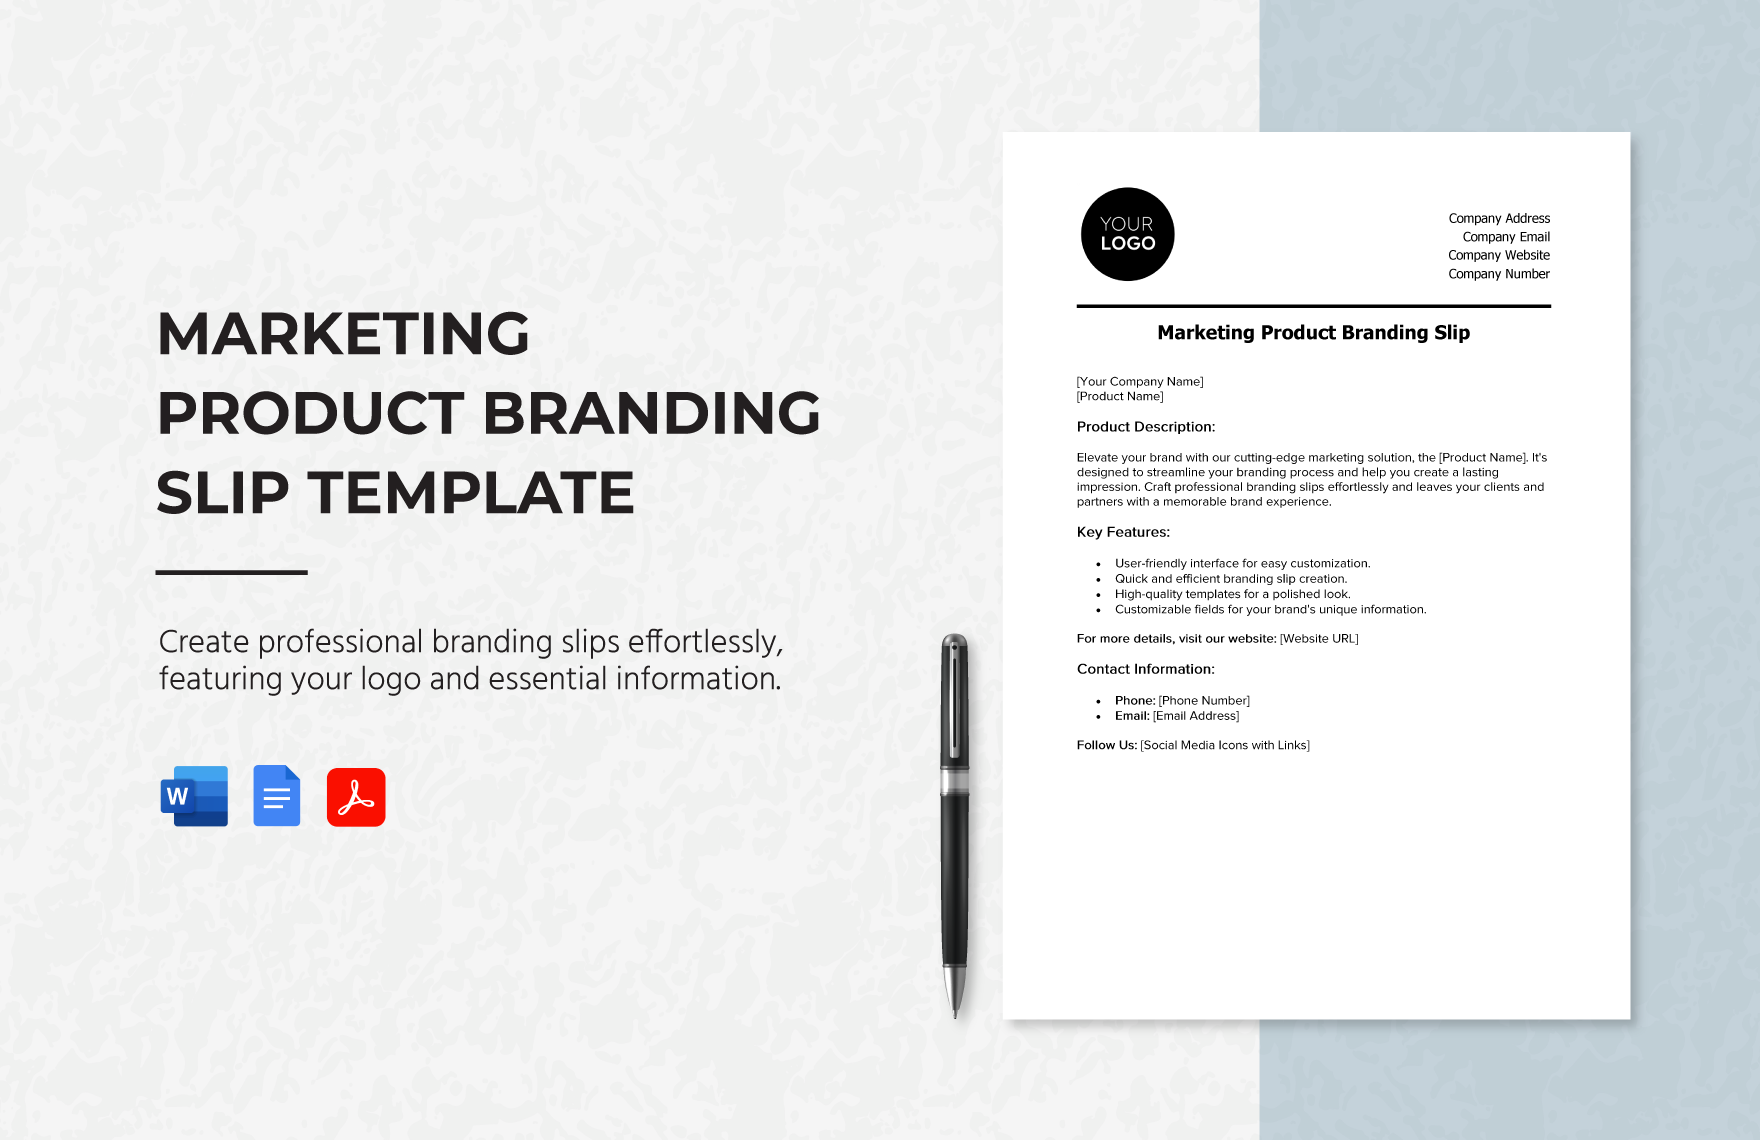 Marketing Product Branding Slip Template in Word, Google Docs, PDF